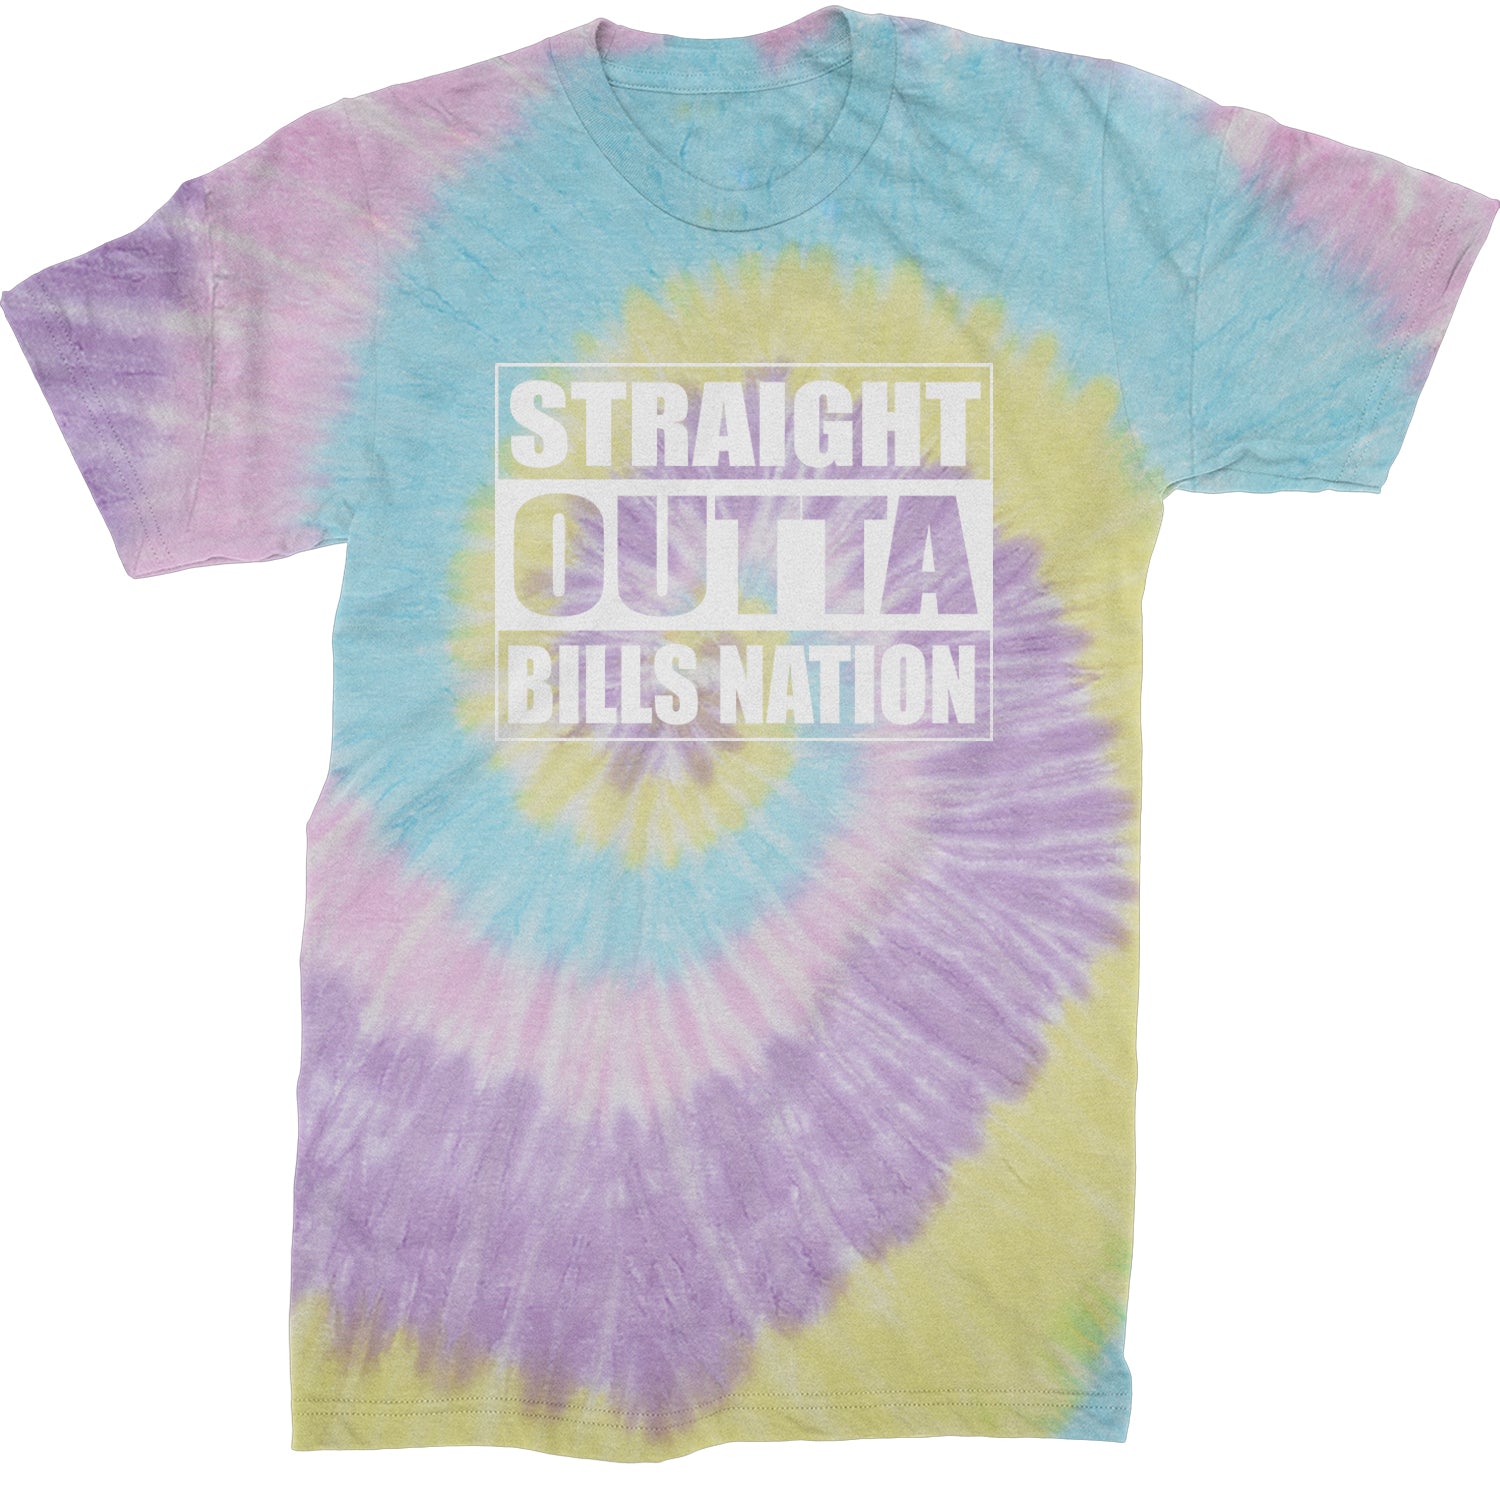 Straight Outta Bills Nation  Mens T-shirt Tie-Dye Jellybean